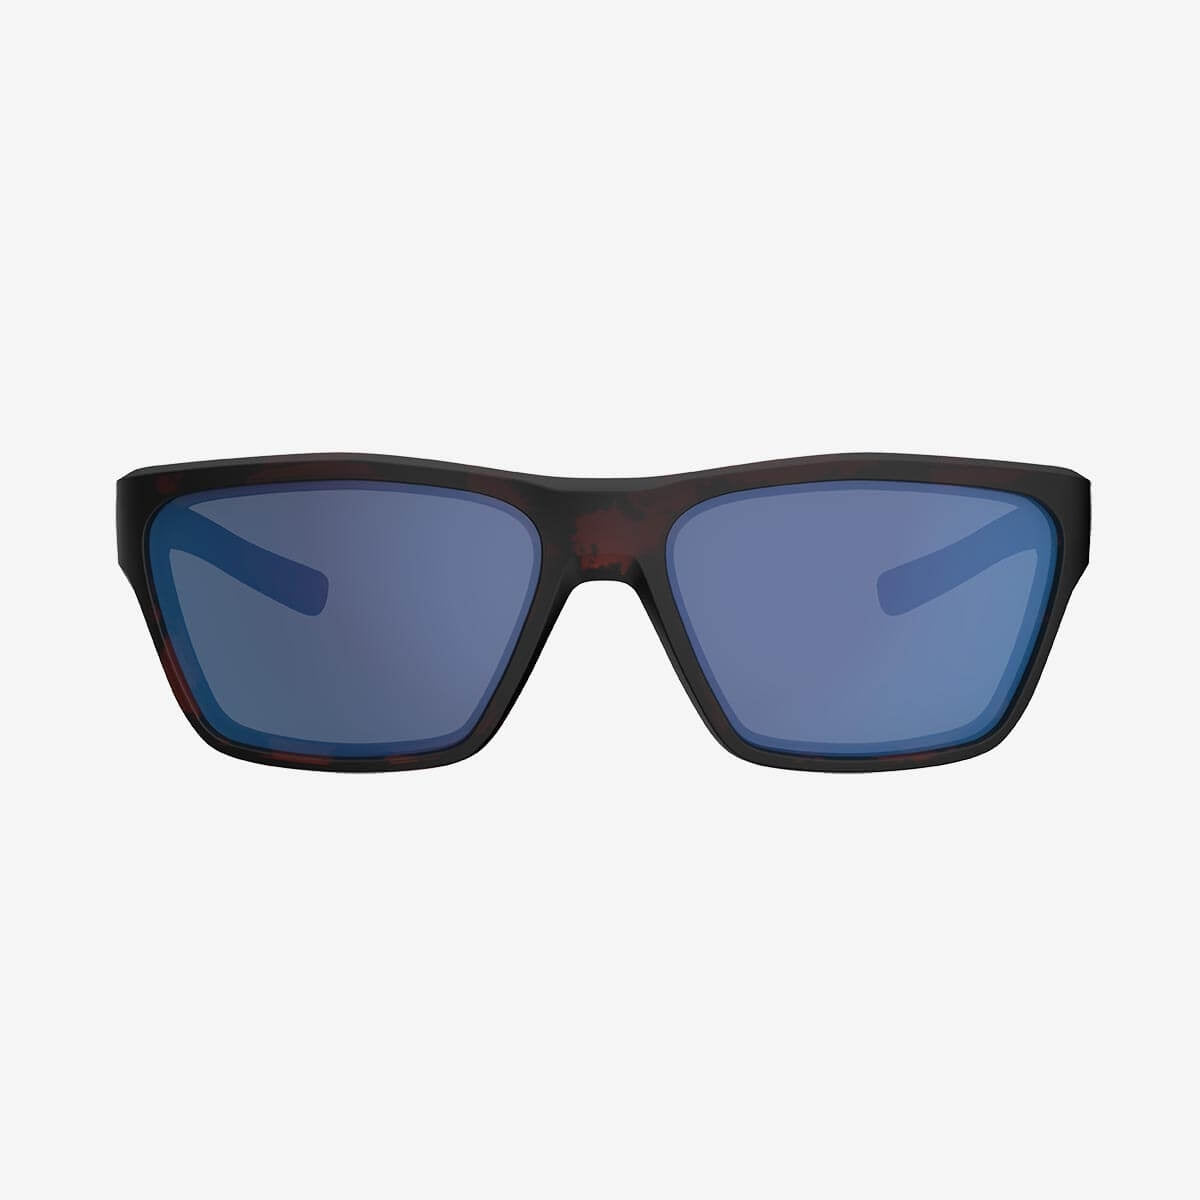 Magpul - Pivot Eyewear, Polarized - Tortoise Frame, Bronze Lens/Blue M